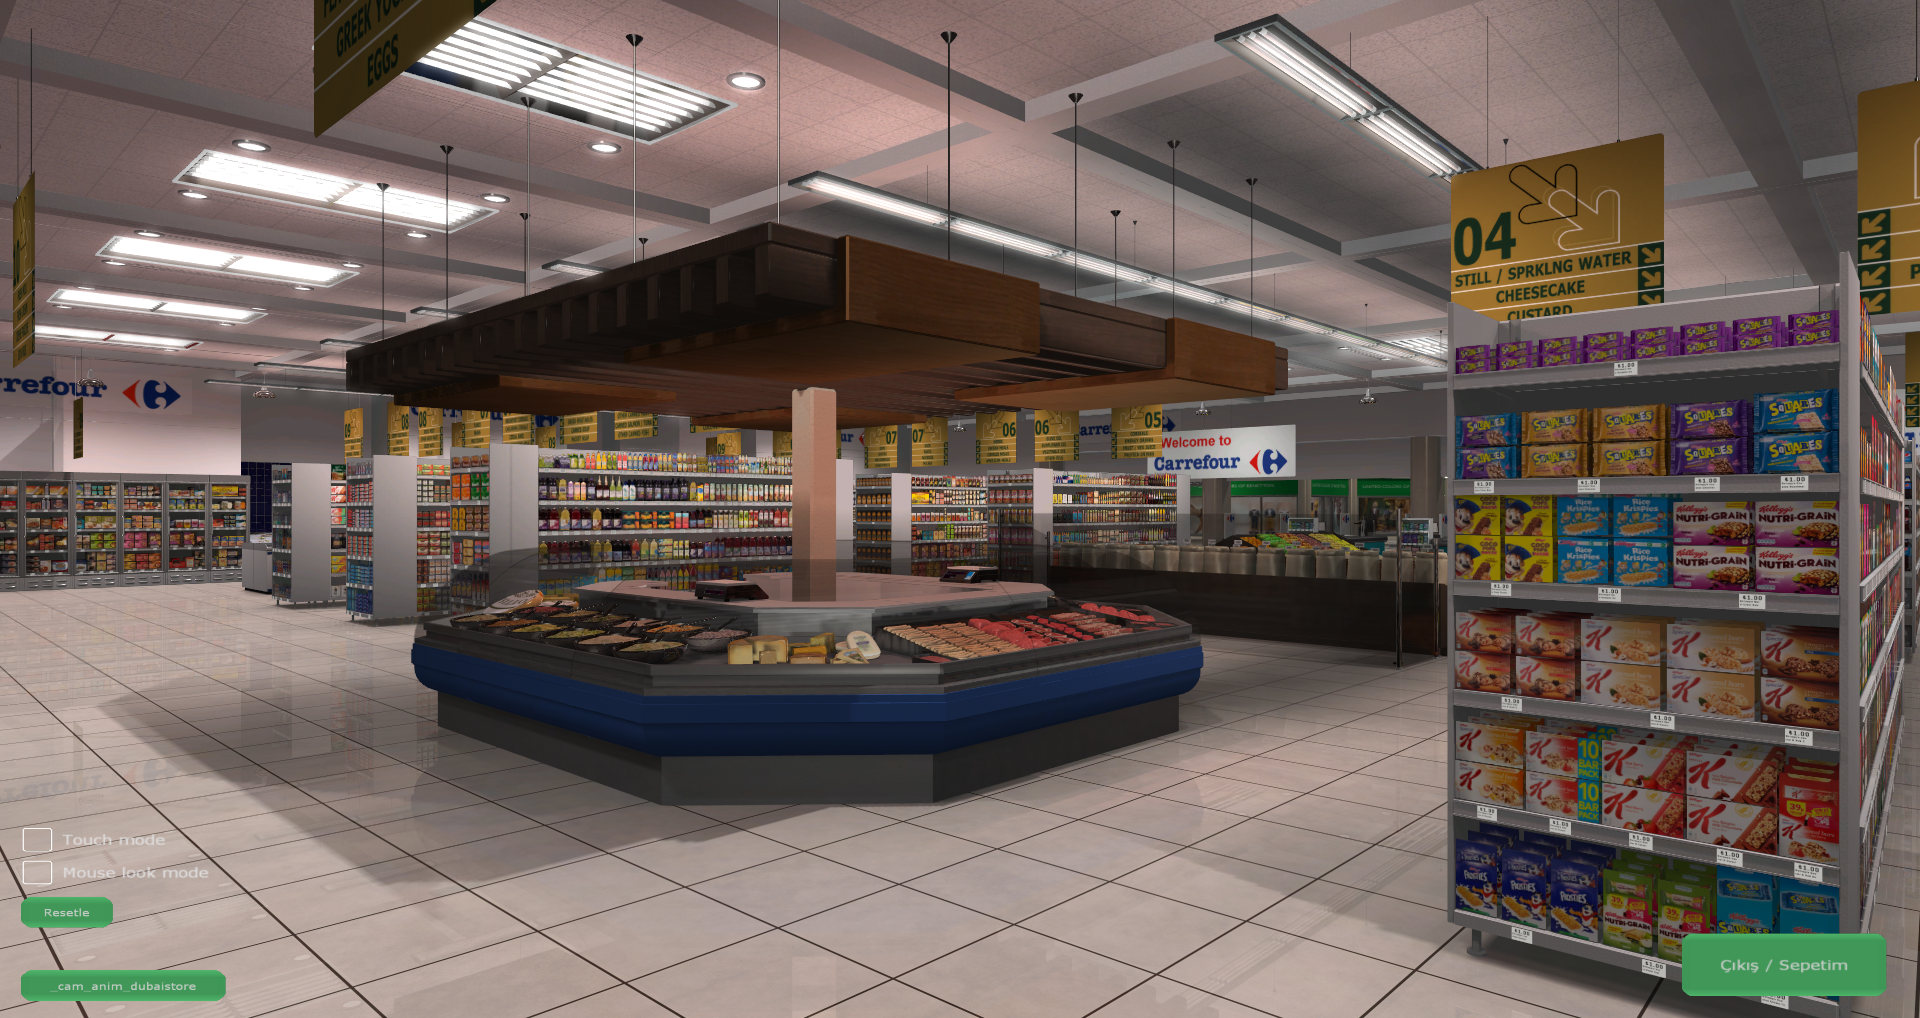 3D Virtual Shopping Virtual Store Screenshot from Carrefour VR Supermarket 5